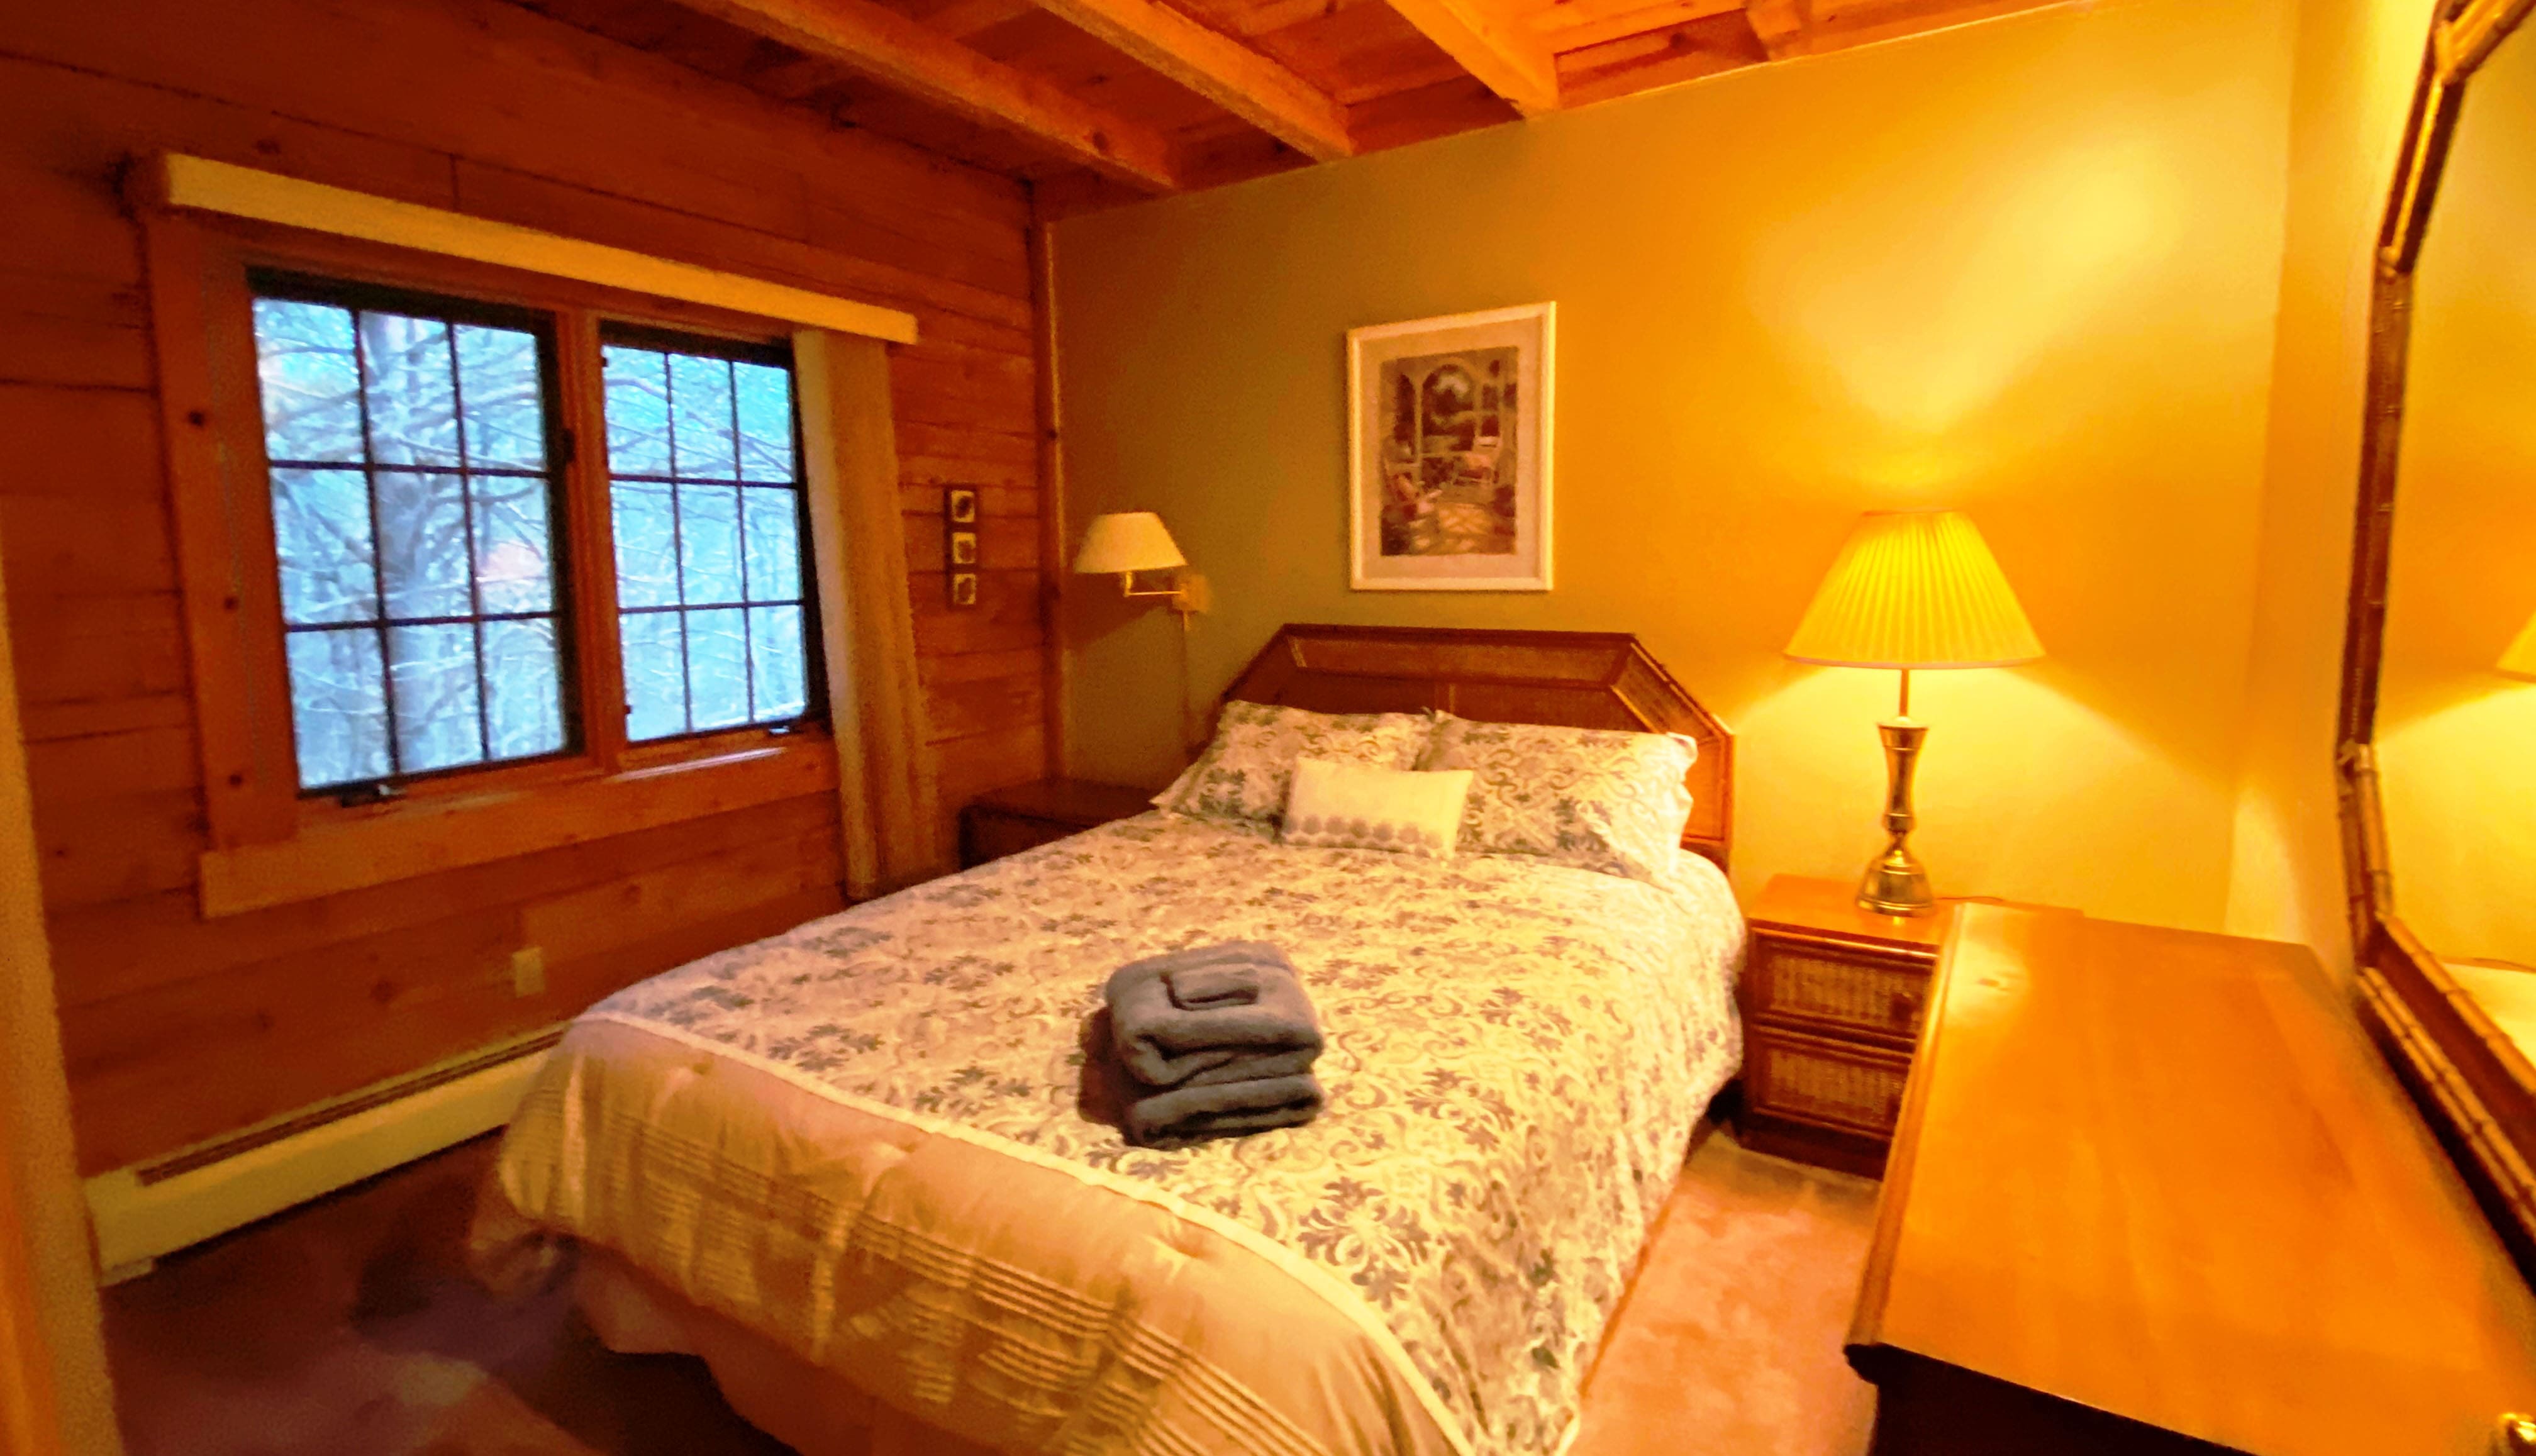 Second Bedroom. Queen Bed. Cozy and Warm.